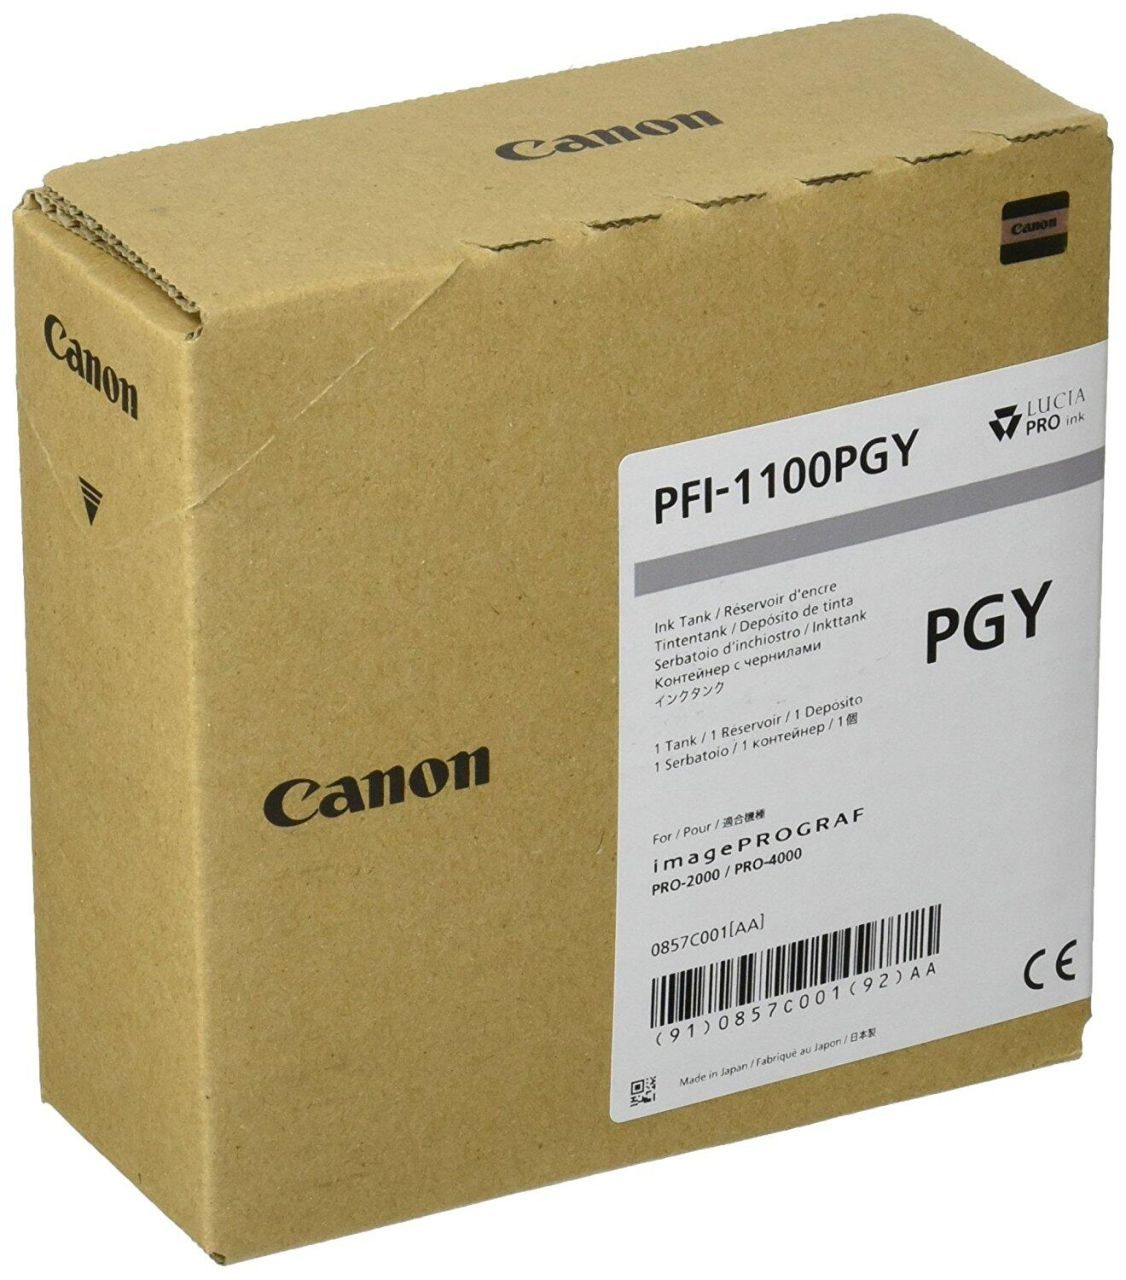 Canon Original PFI-1100PGY Druckerpatrone - fotograu (0857C001)